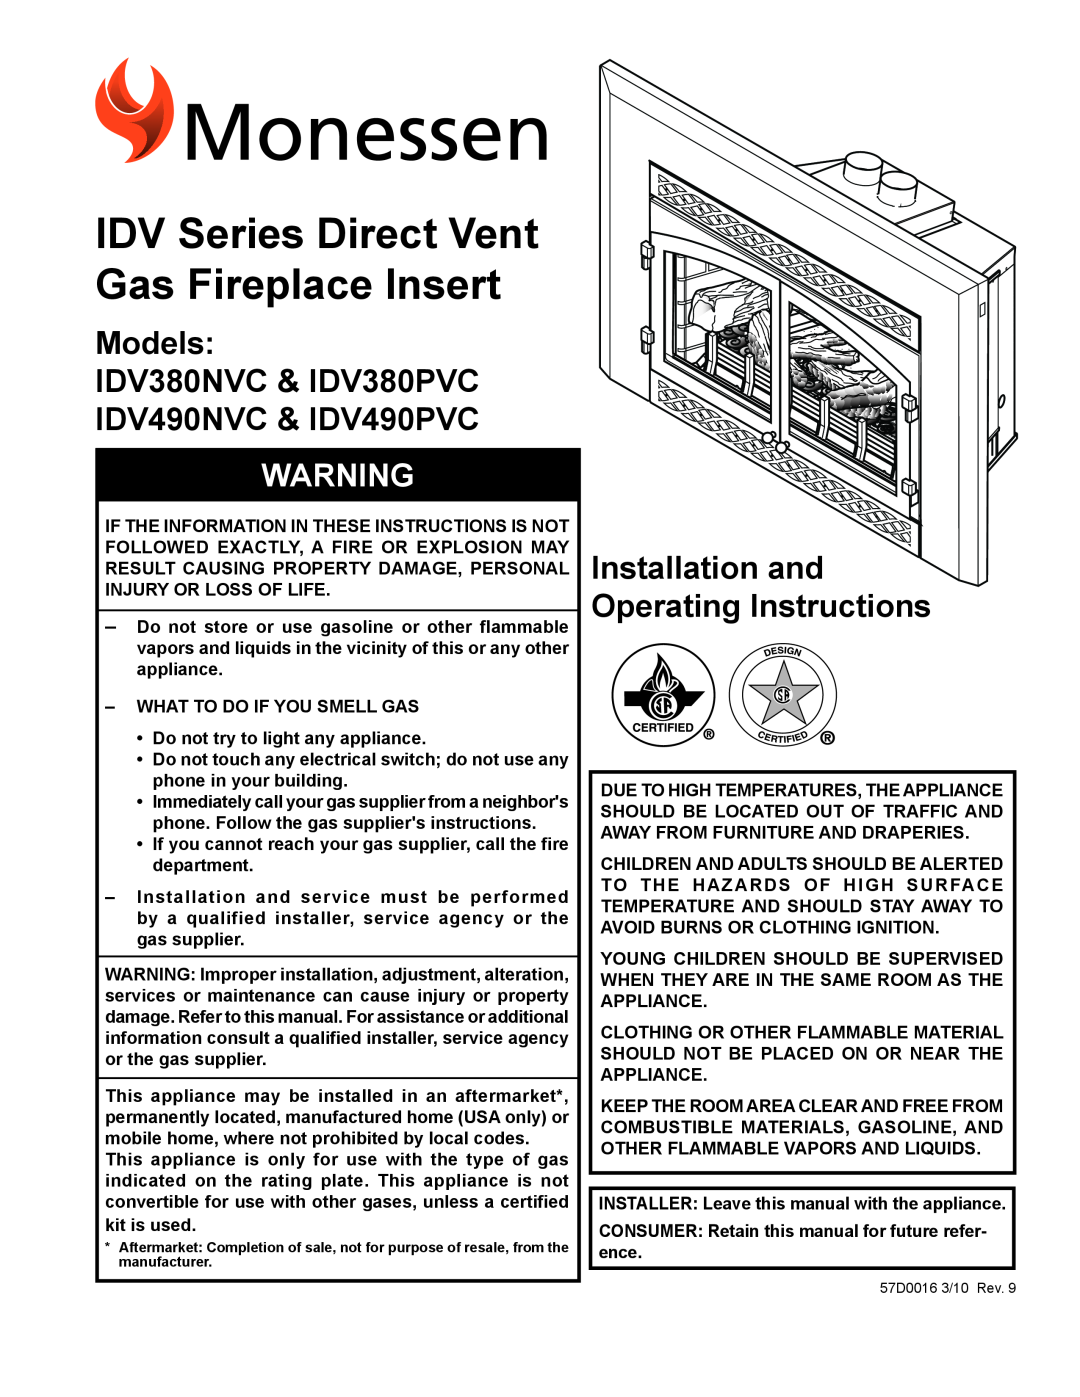 Monessen Hearth manual Models, iDV380NVC & iDV380PVC IDV490NVC & IDV490PVC, Installation and Operating Instructions 